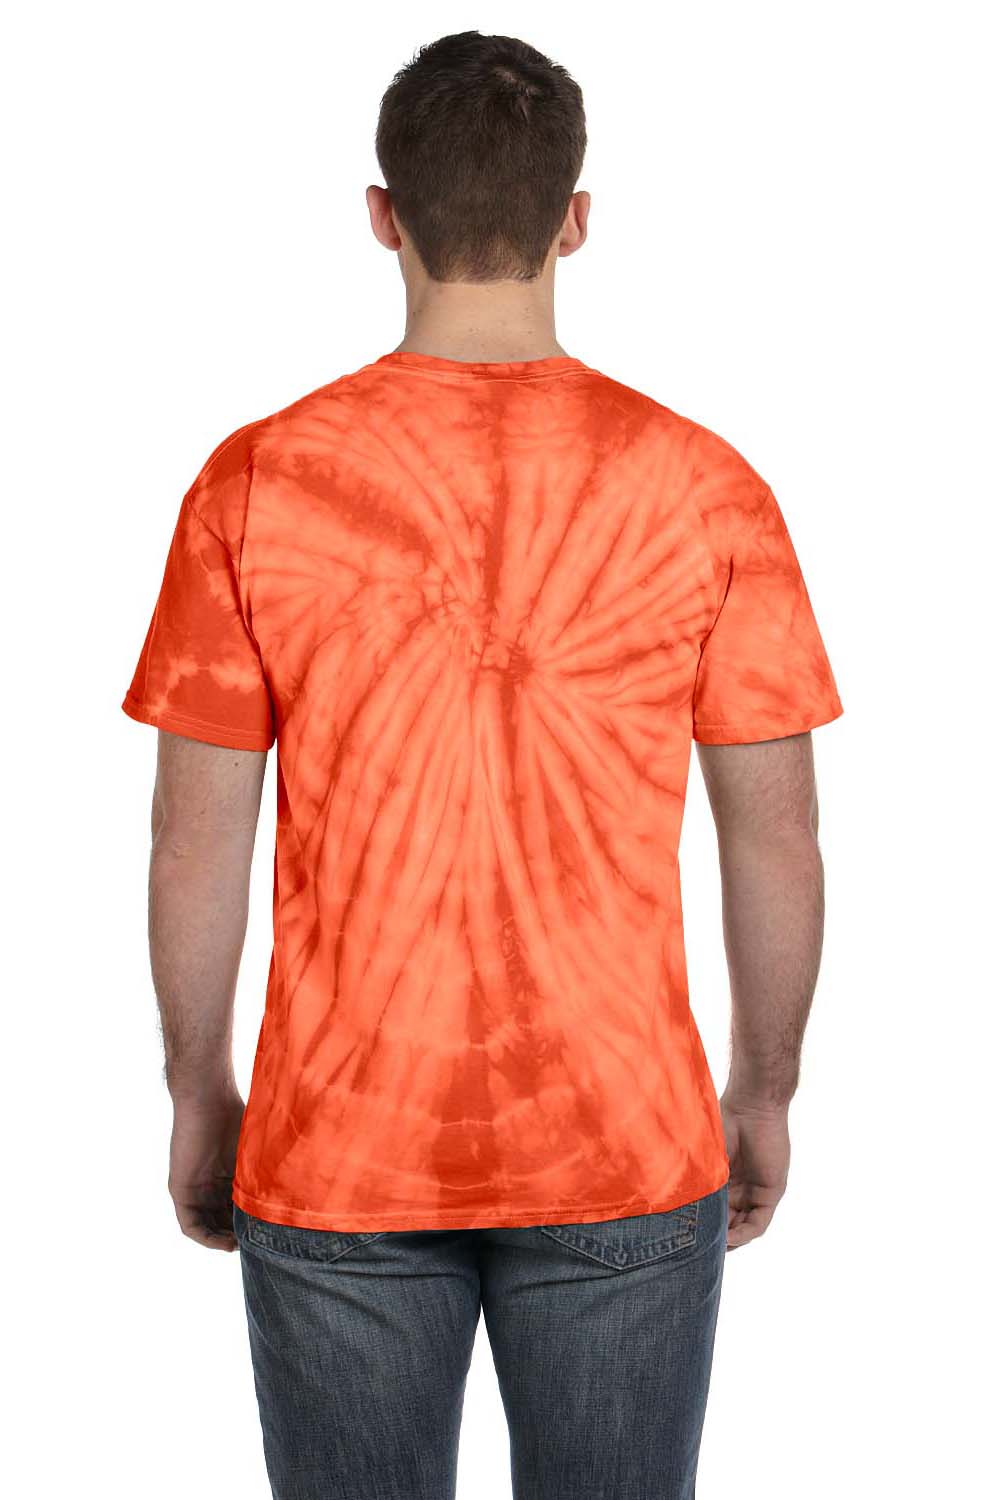 Tie-Dye CD101 Mens Short Sleeve Crewneck T-Shirt Orange Back